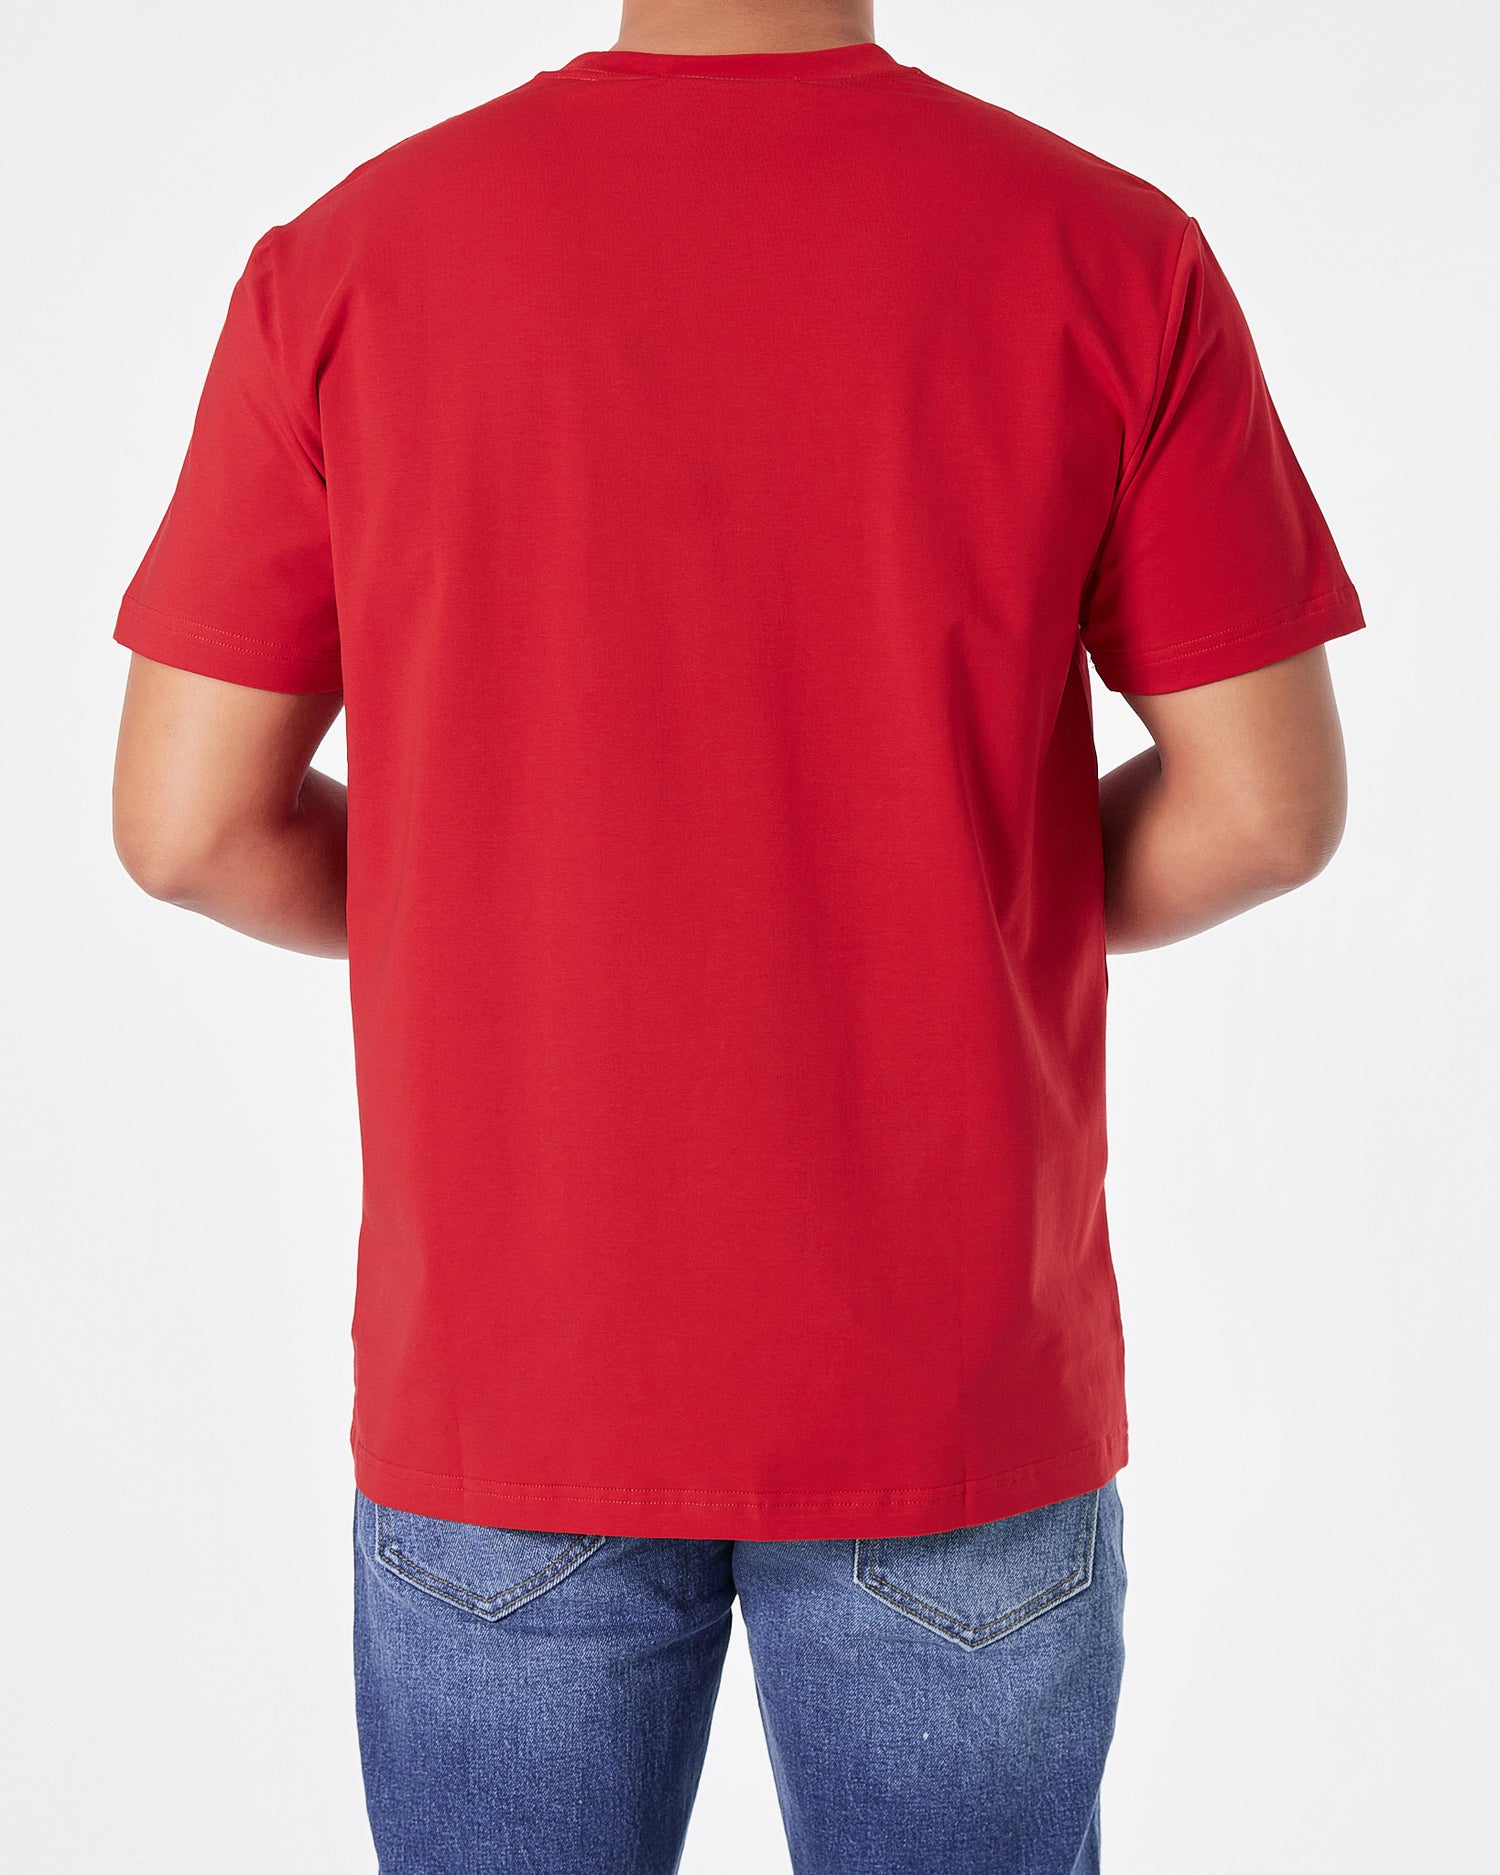 ARM AX Logo Printed Men Red T-Shirt 16.90